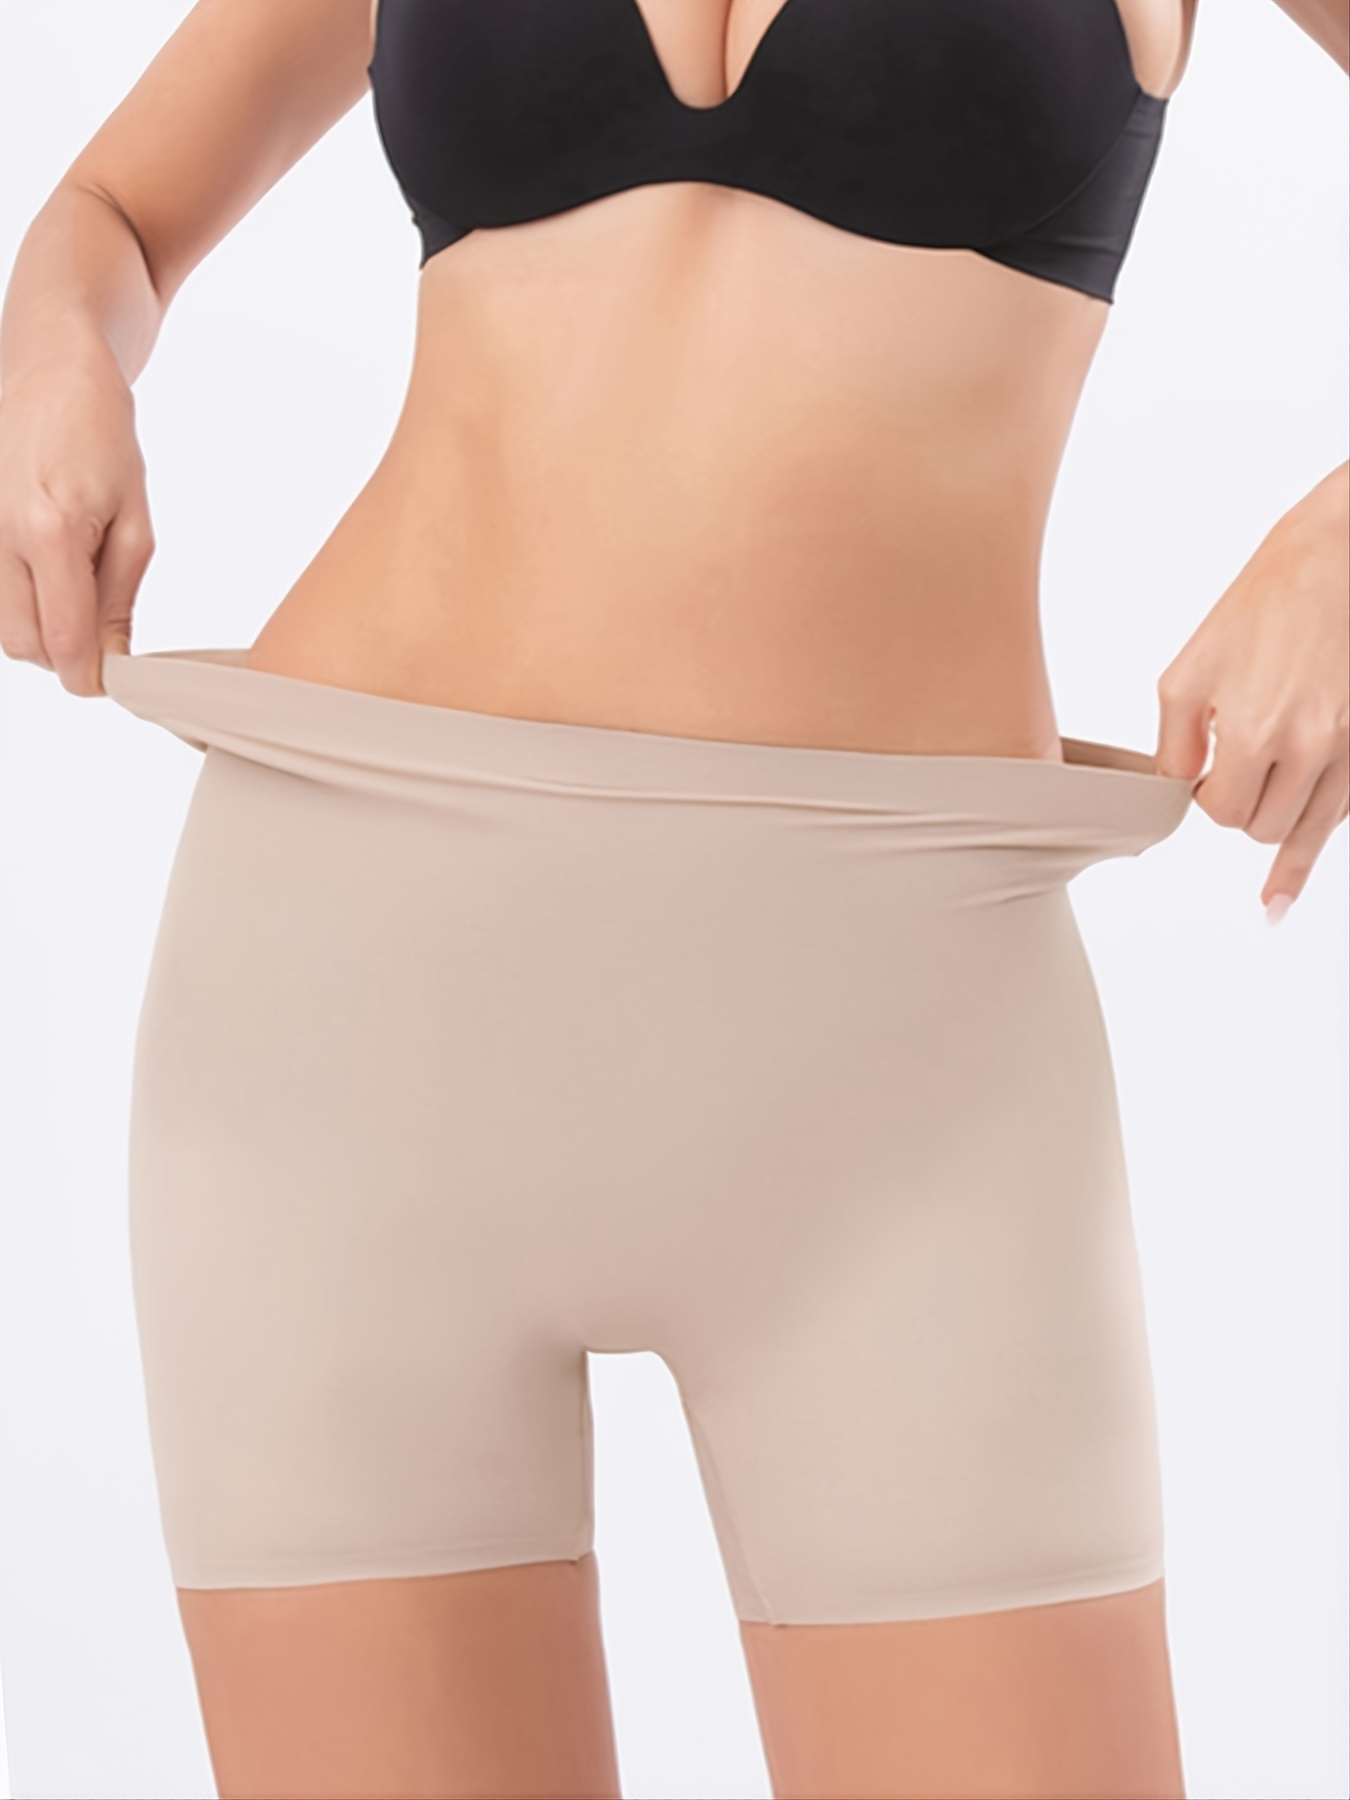 Women's Seamless Shaping Shorts Panties Tummy Control Underwear